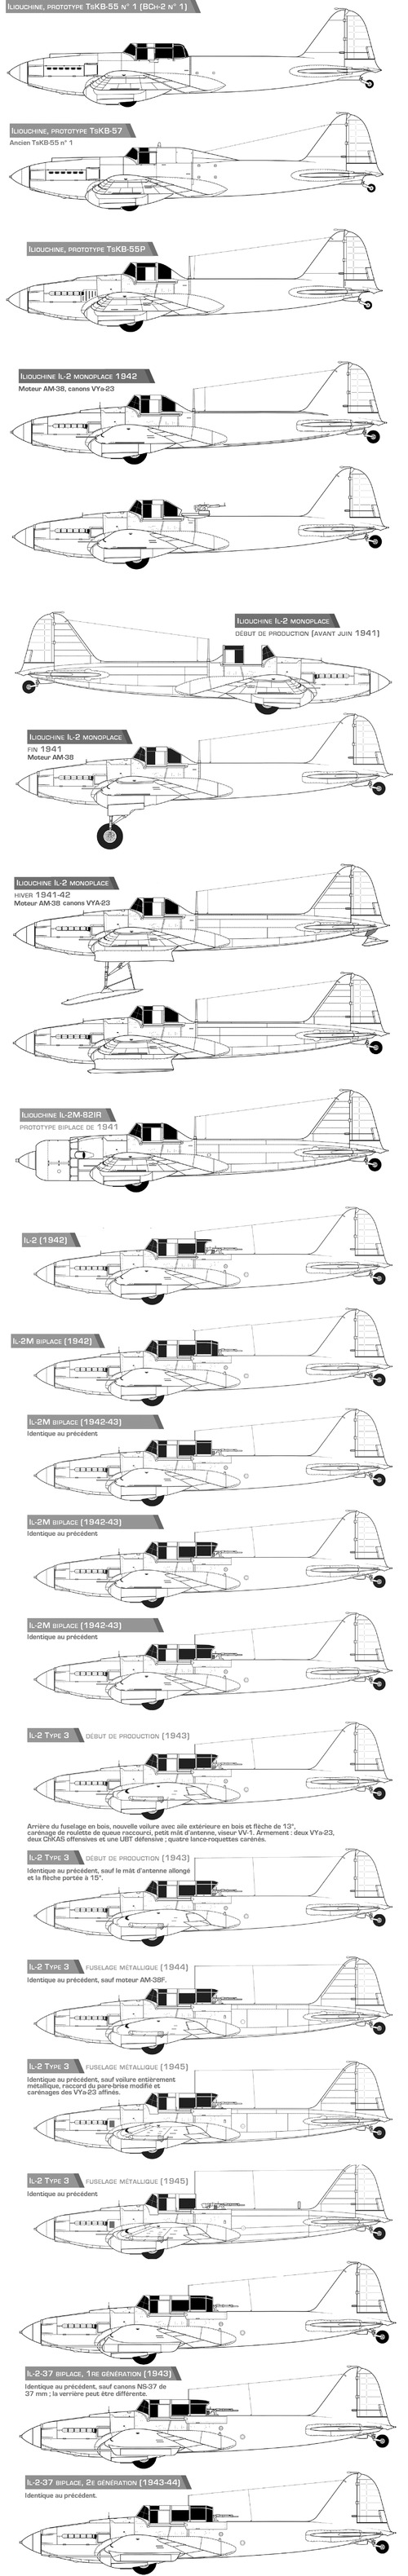 Ilyushin IL-2 Sturmovik